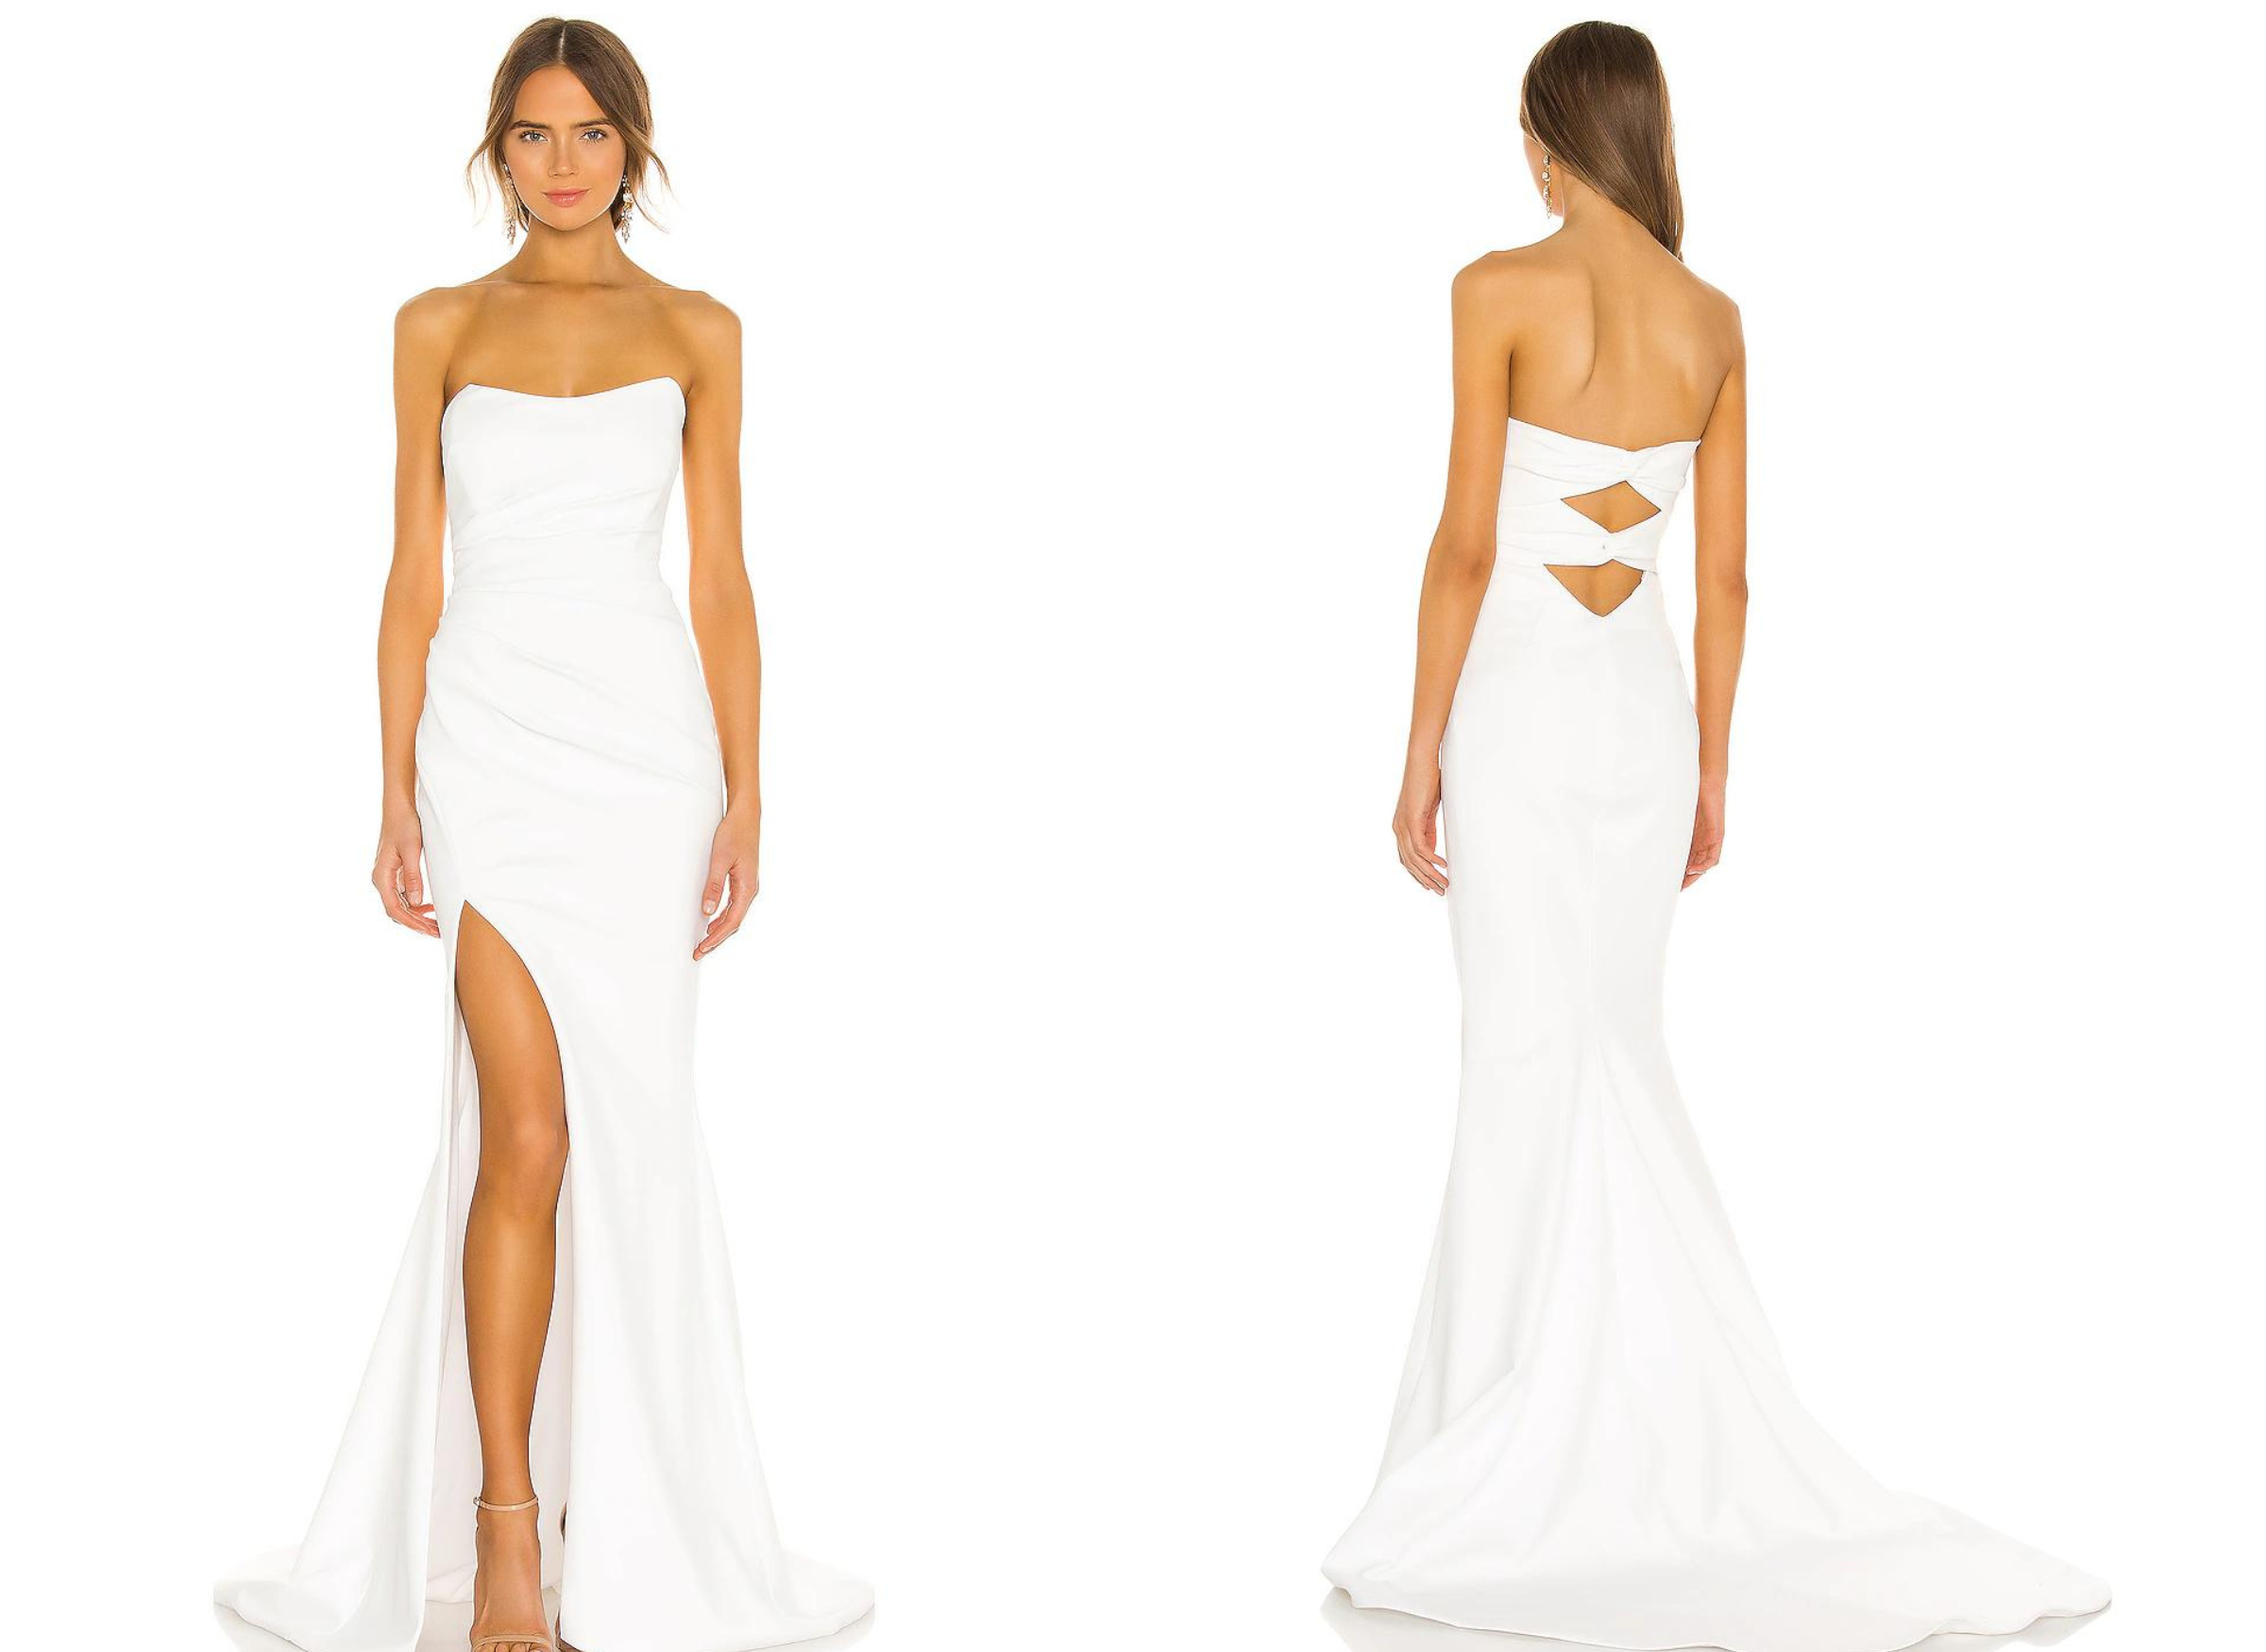 Strapless Online Wedding Dress from Revolve